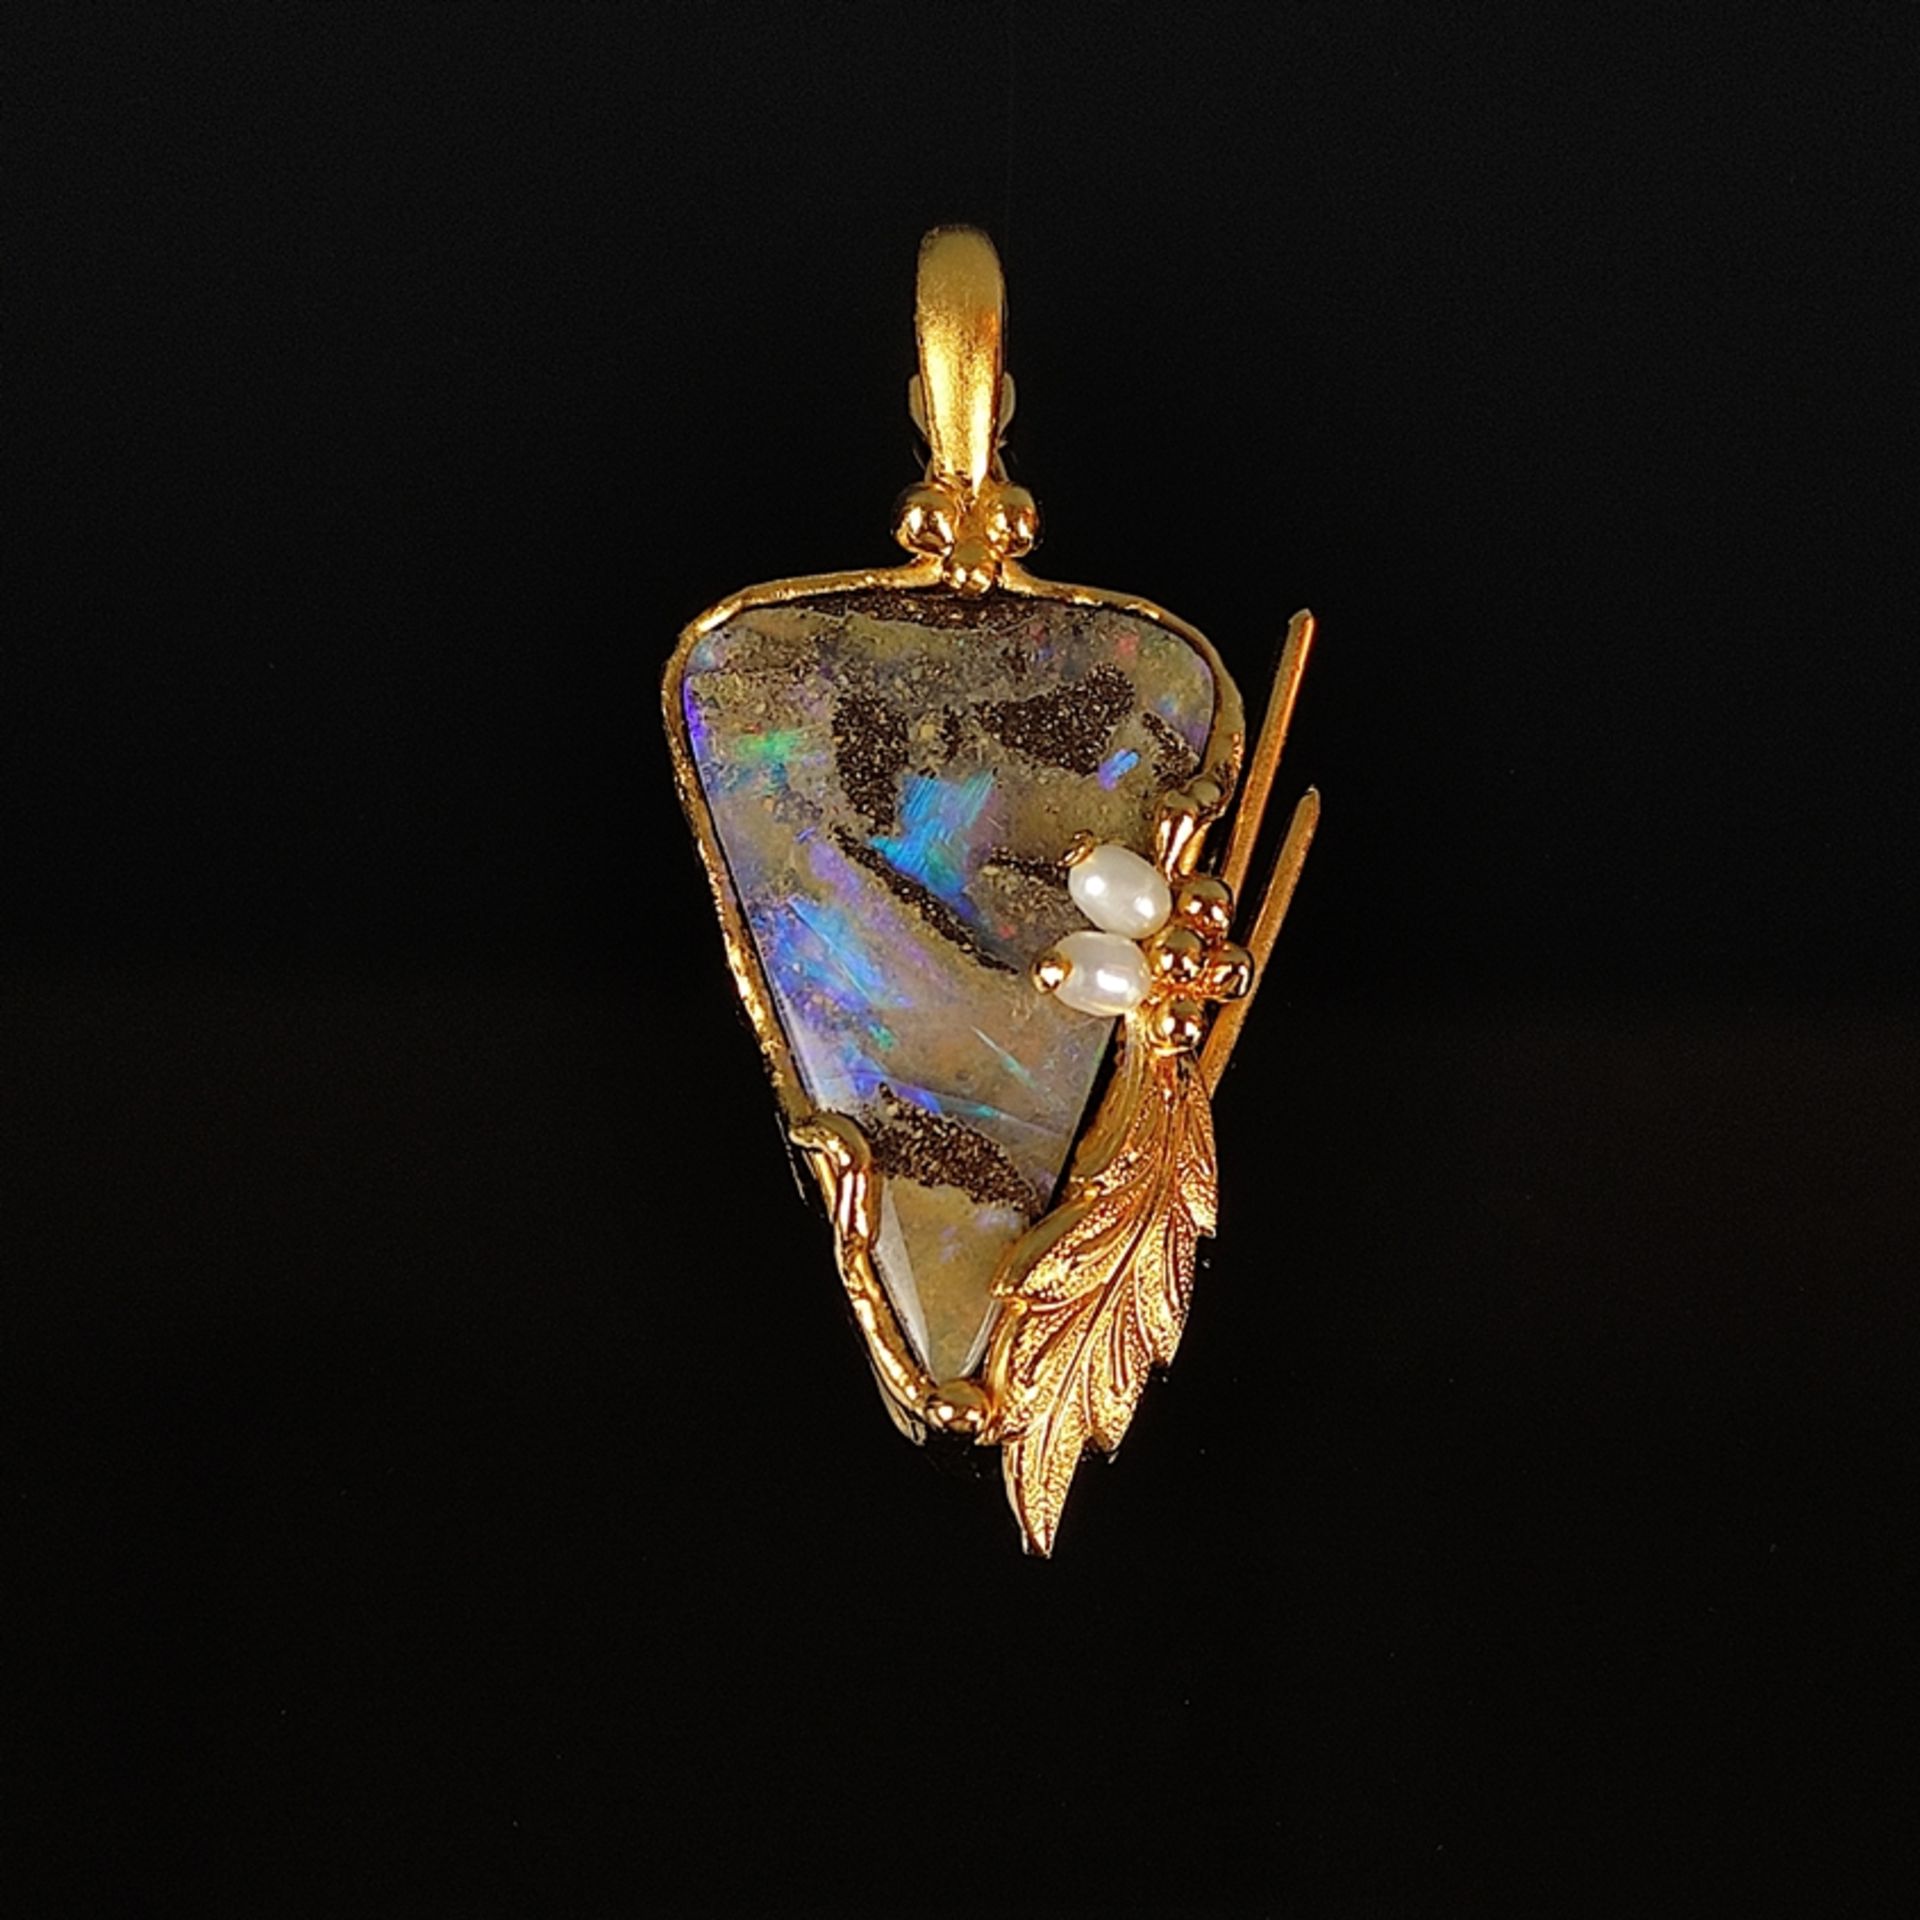 Opal-Anhänger, Sterlingsilber vergoldet, Gesamtgewicht 6,52g, mittig eingefasster Boulderopal, Maße